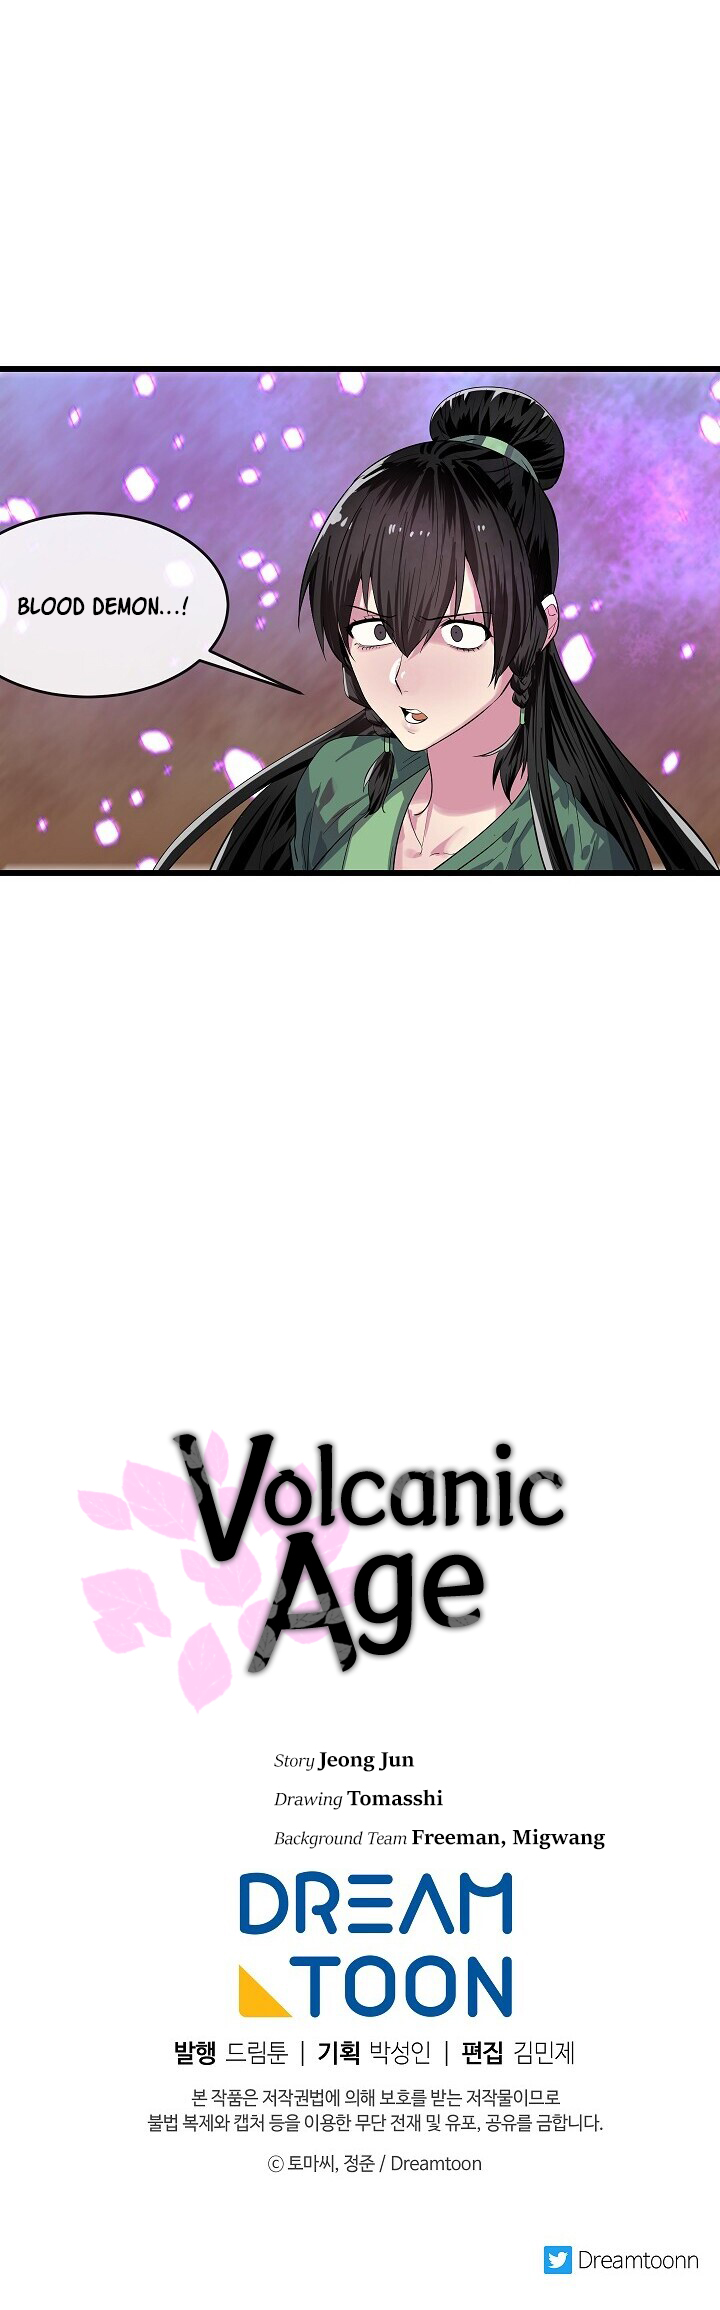 Volcanic Age image